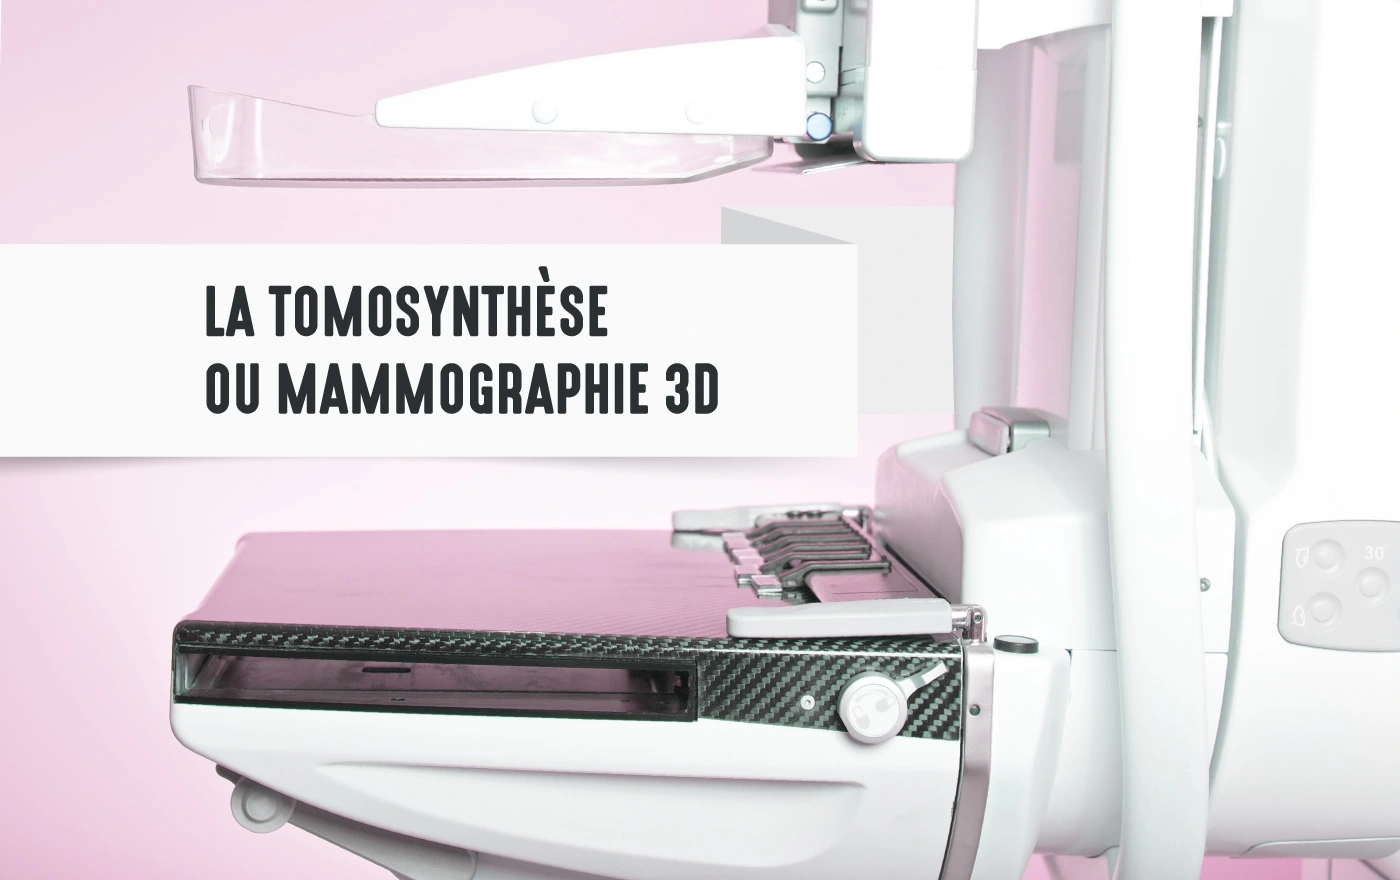 Aperçu sur la Tomosynthèse Mammaire Numérique (TMN)